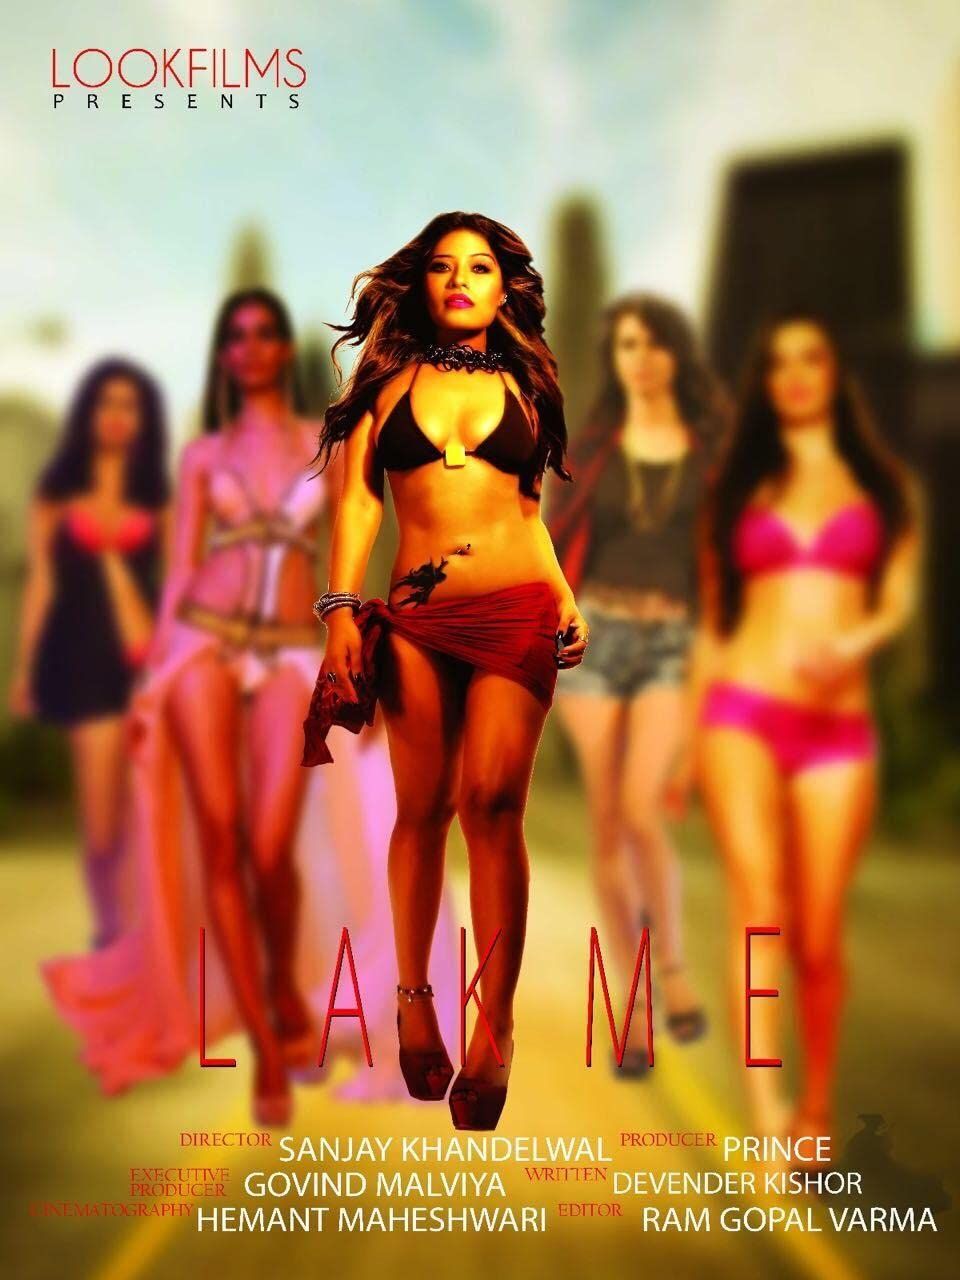 Lakme (2016) Hindi HDRip download full movie